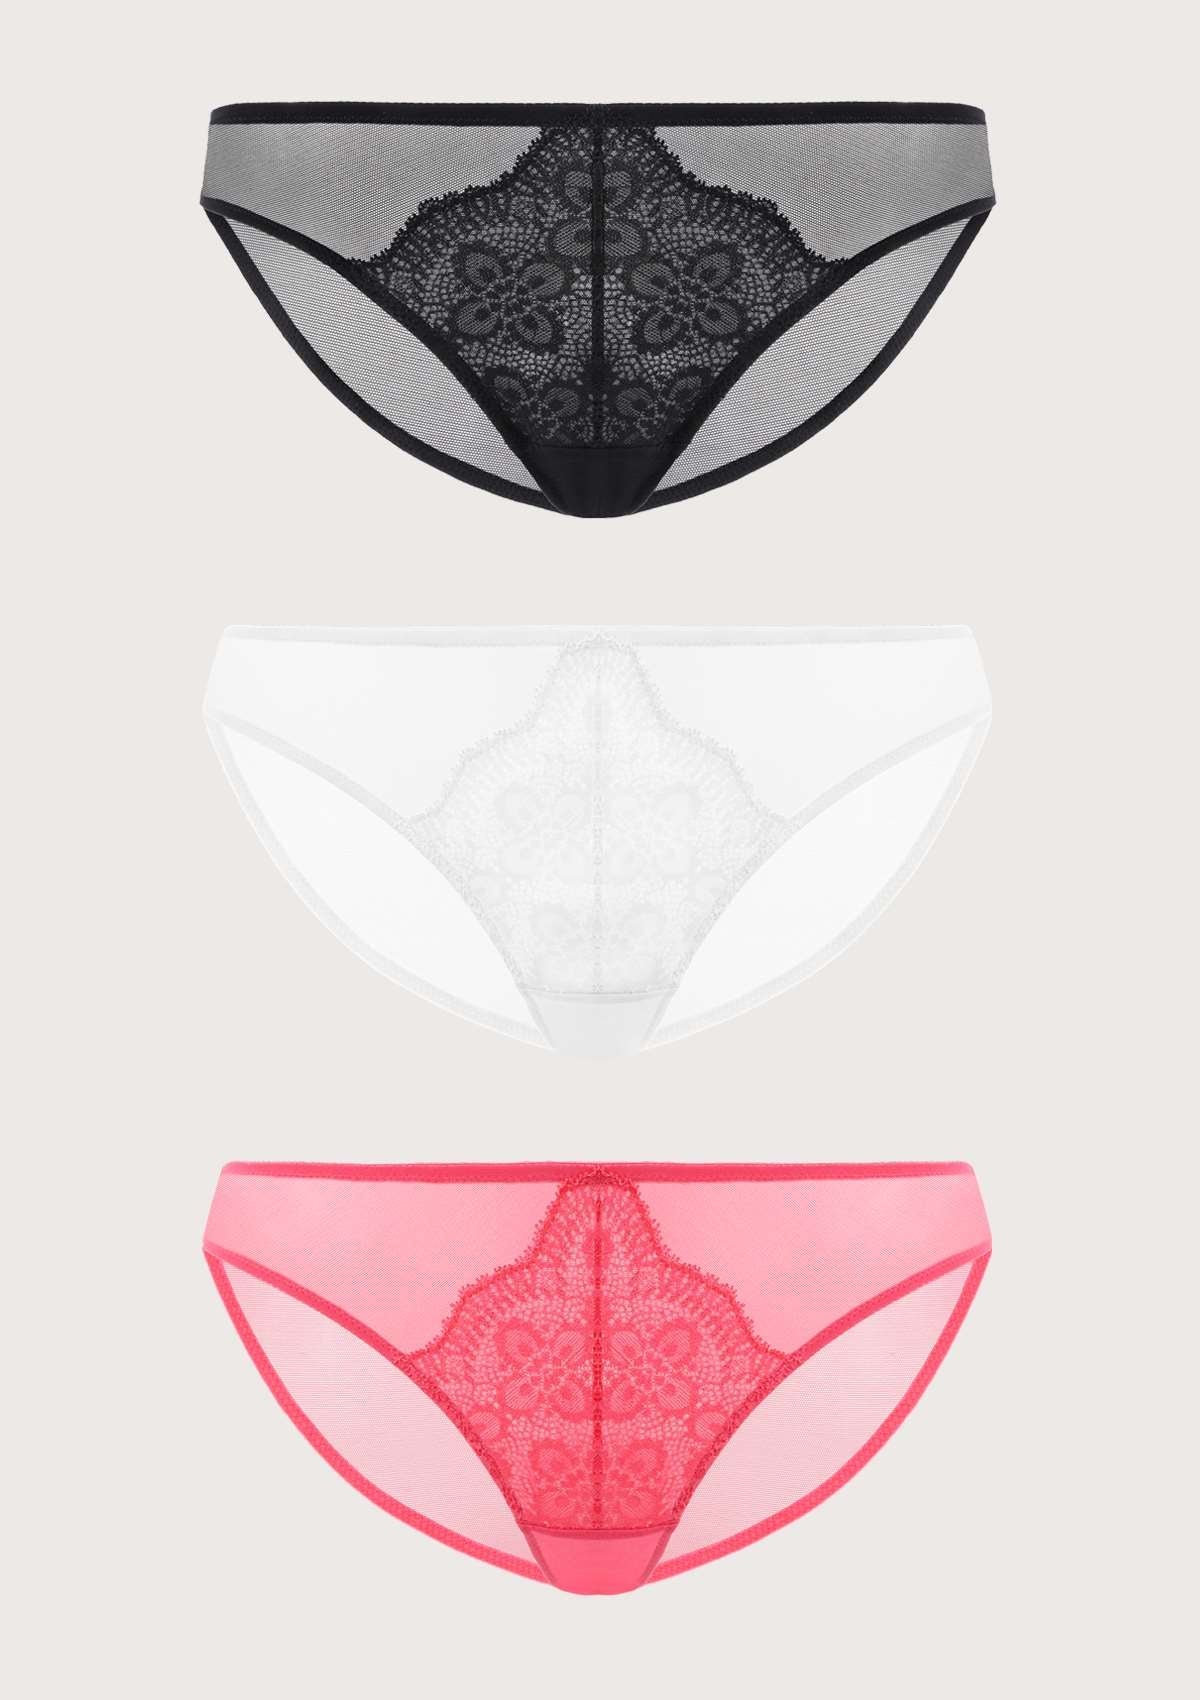 HSIA Front Flower Lace Bikini Underwear 3 Pack - XL / Black+White+Pink